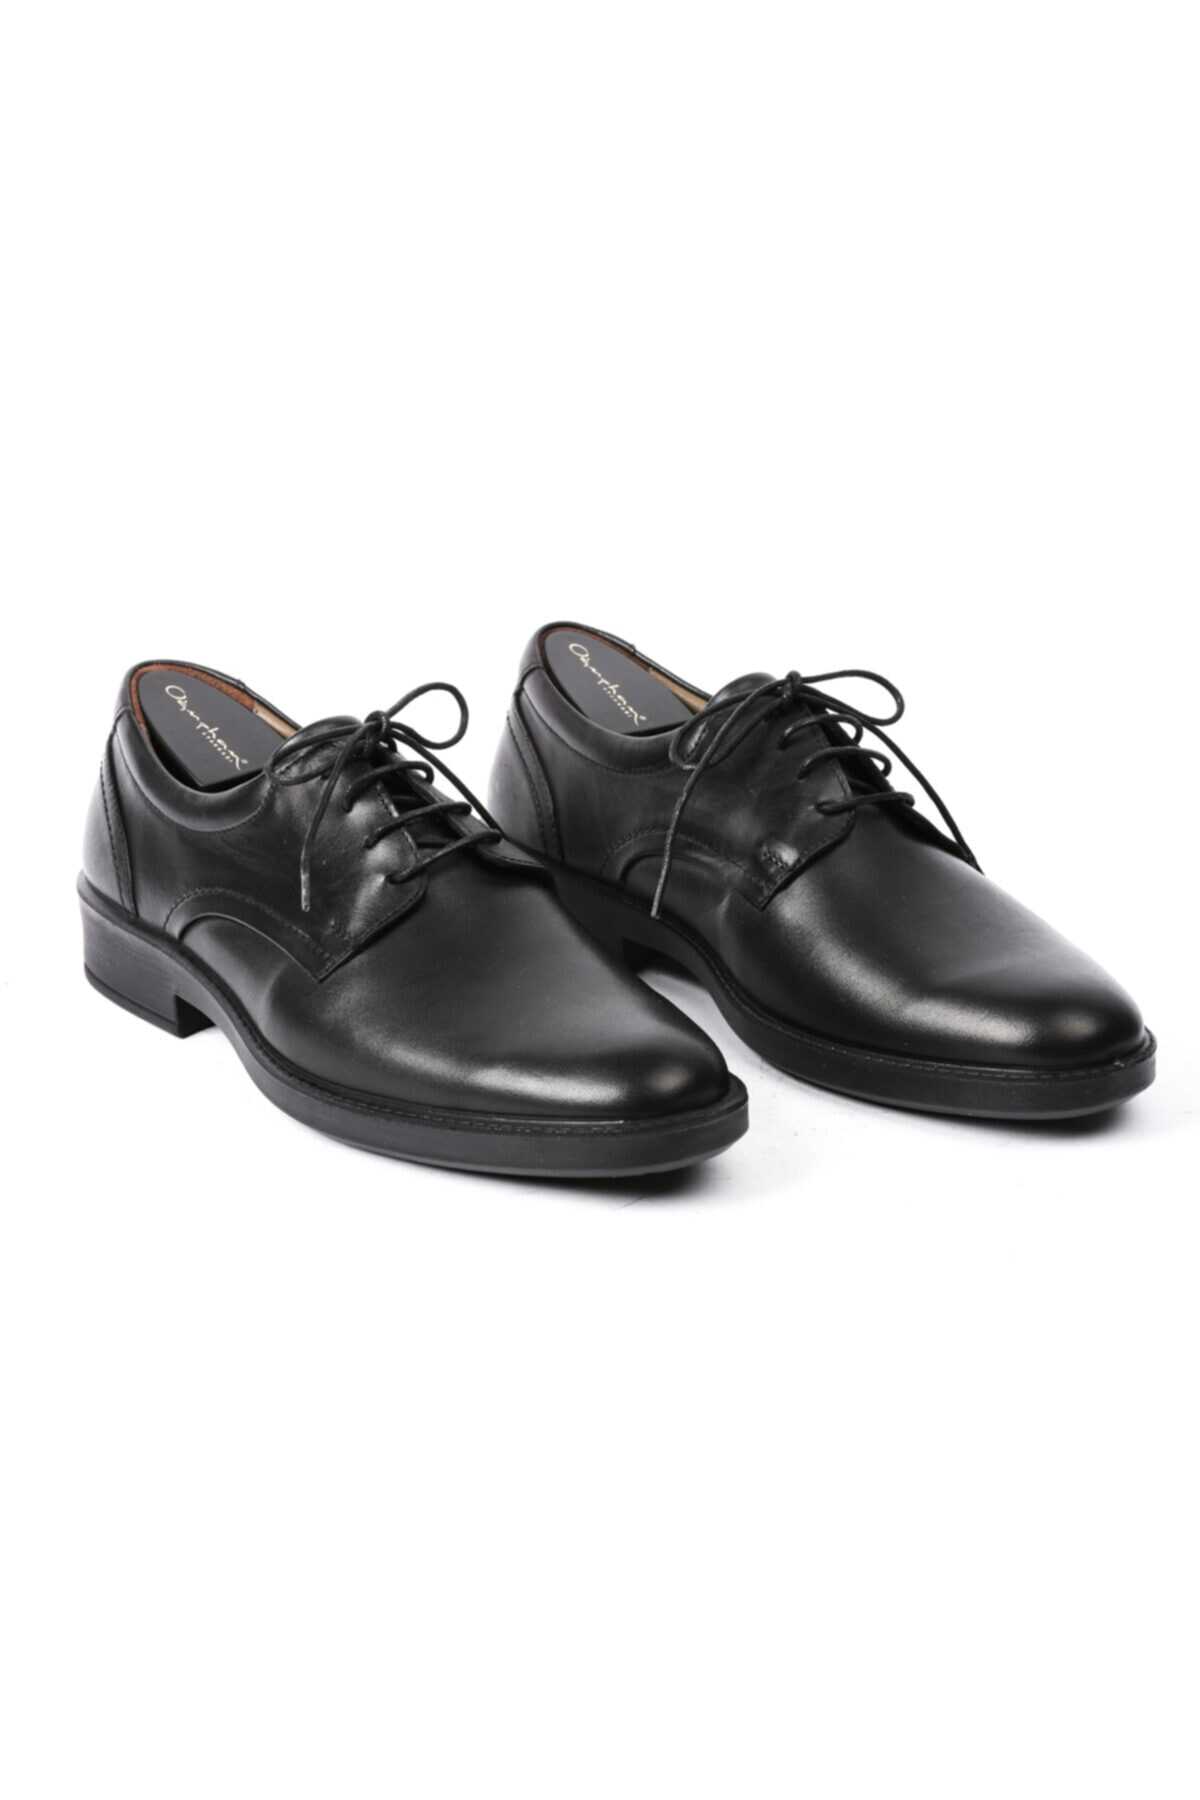 کفش کلاسیک چرم مردانه مشکی برند Oğuzhan ayakkabı